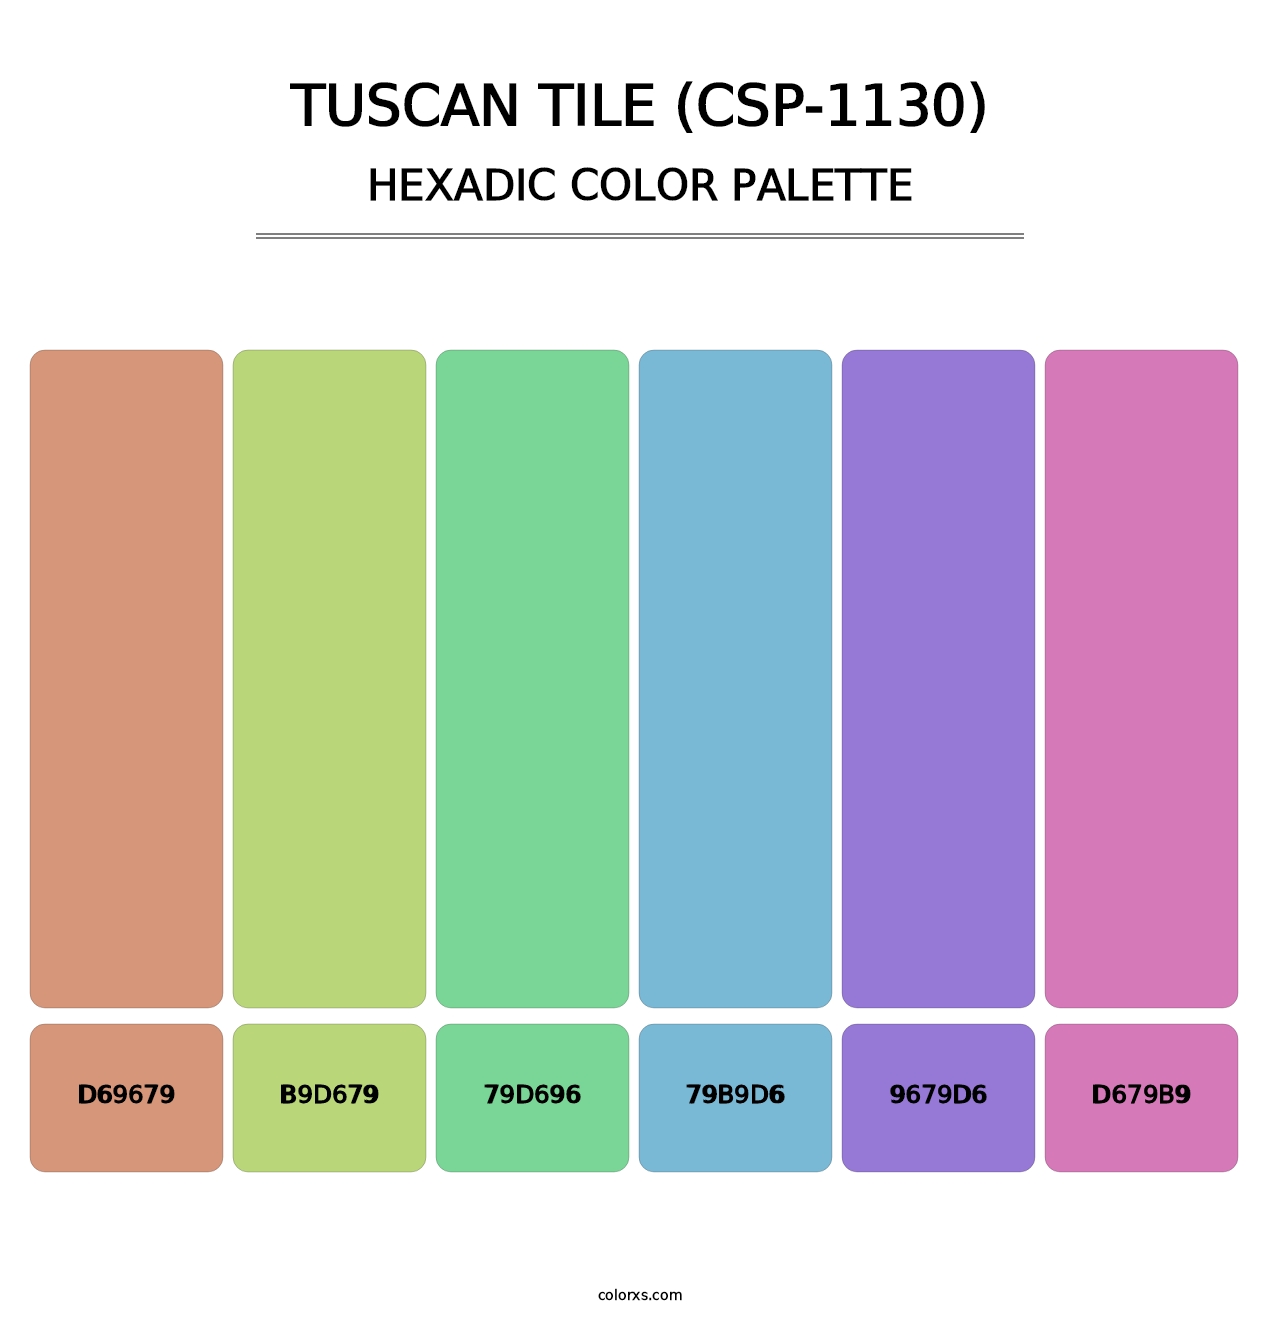 Tuscan Tile (CSP-1130) - Hexadic Color Palette